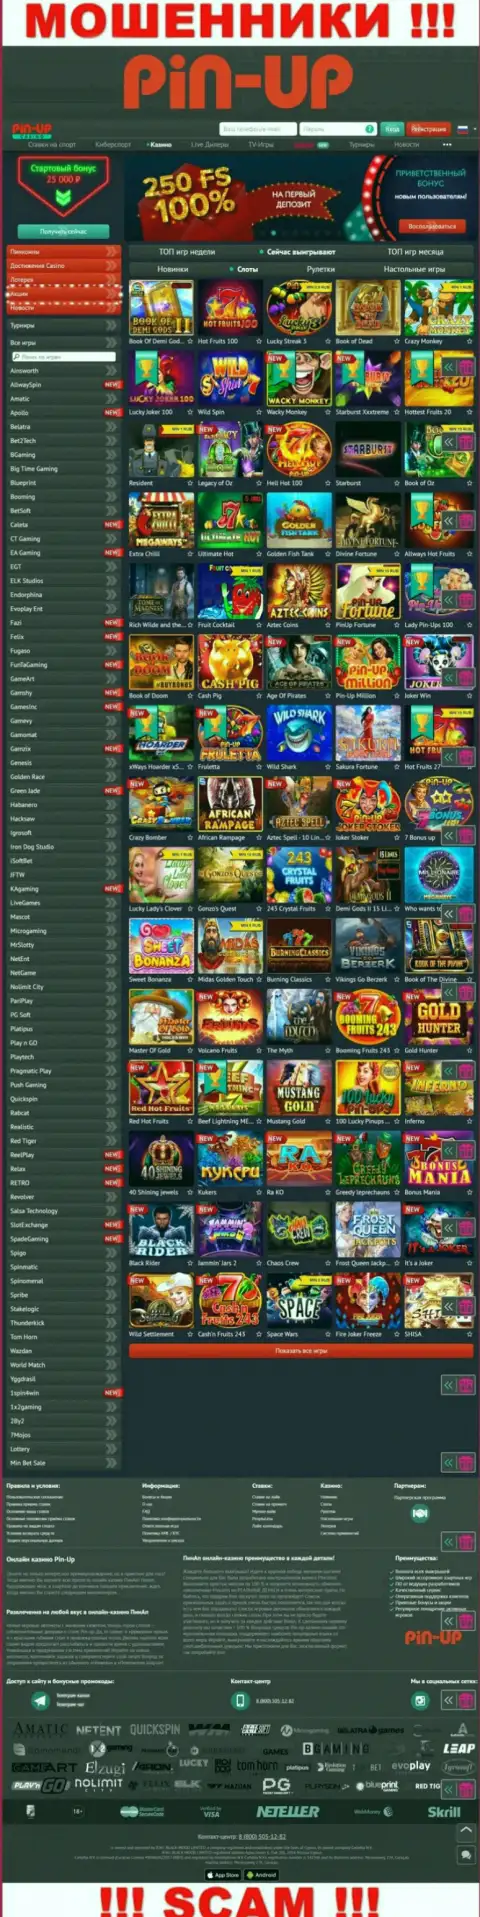 Pin-Up Casino - это официальный сервис интернет-разводил PinUpCasino